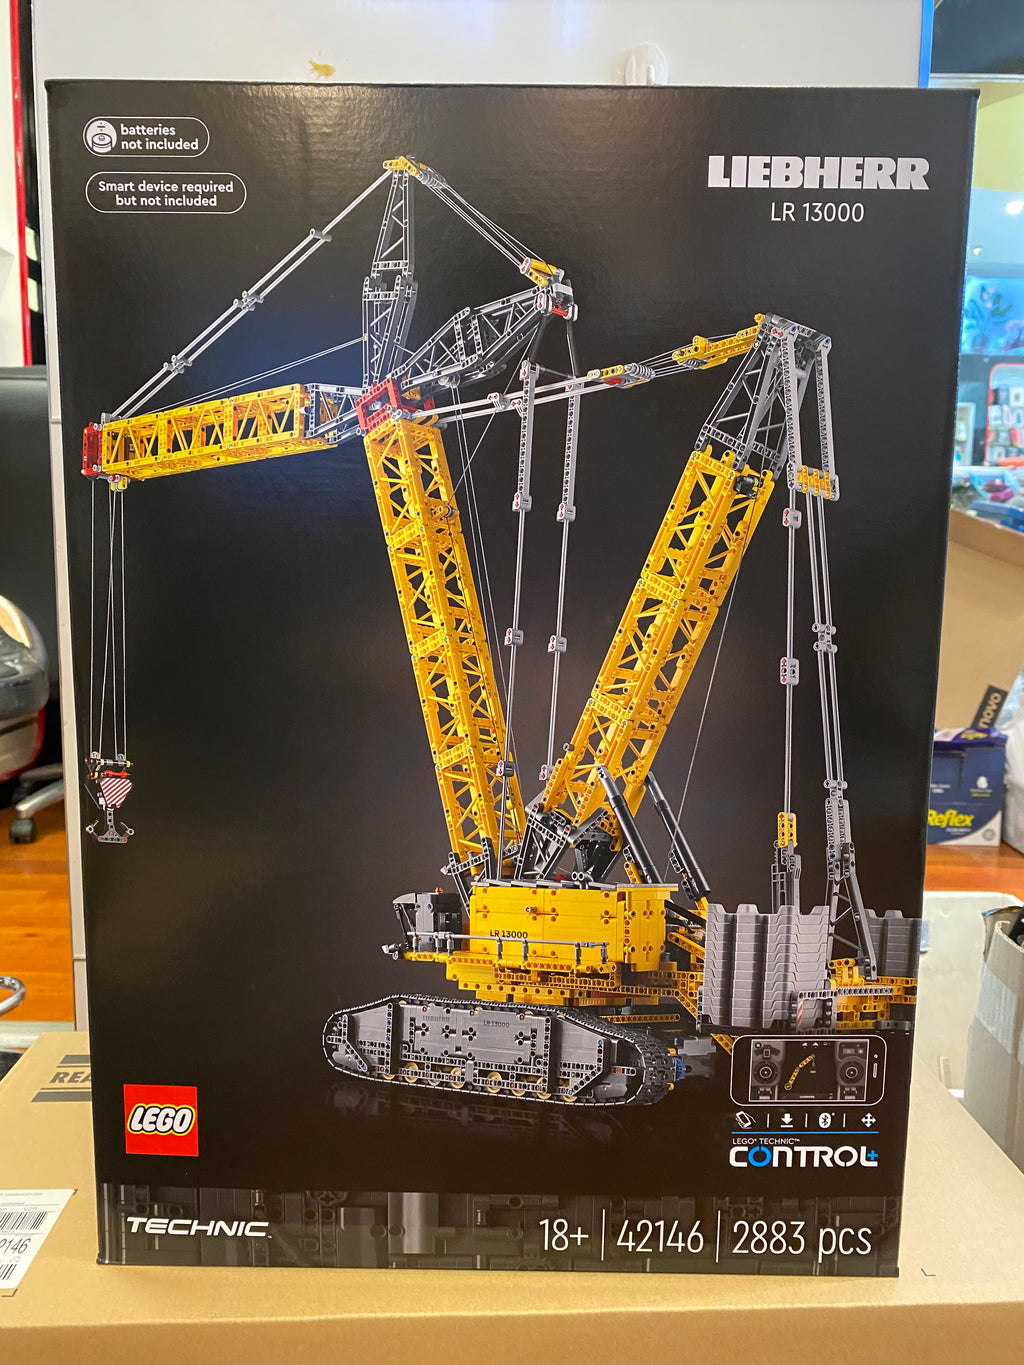 LEGO Technic 42146 Liebherr Crawler Crane LR 13000 – Cool Mobile